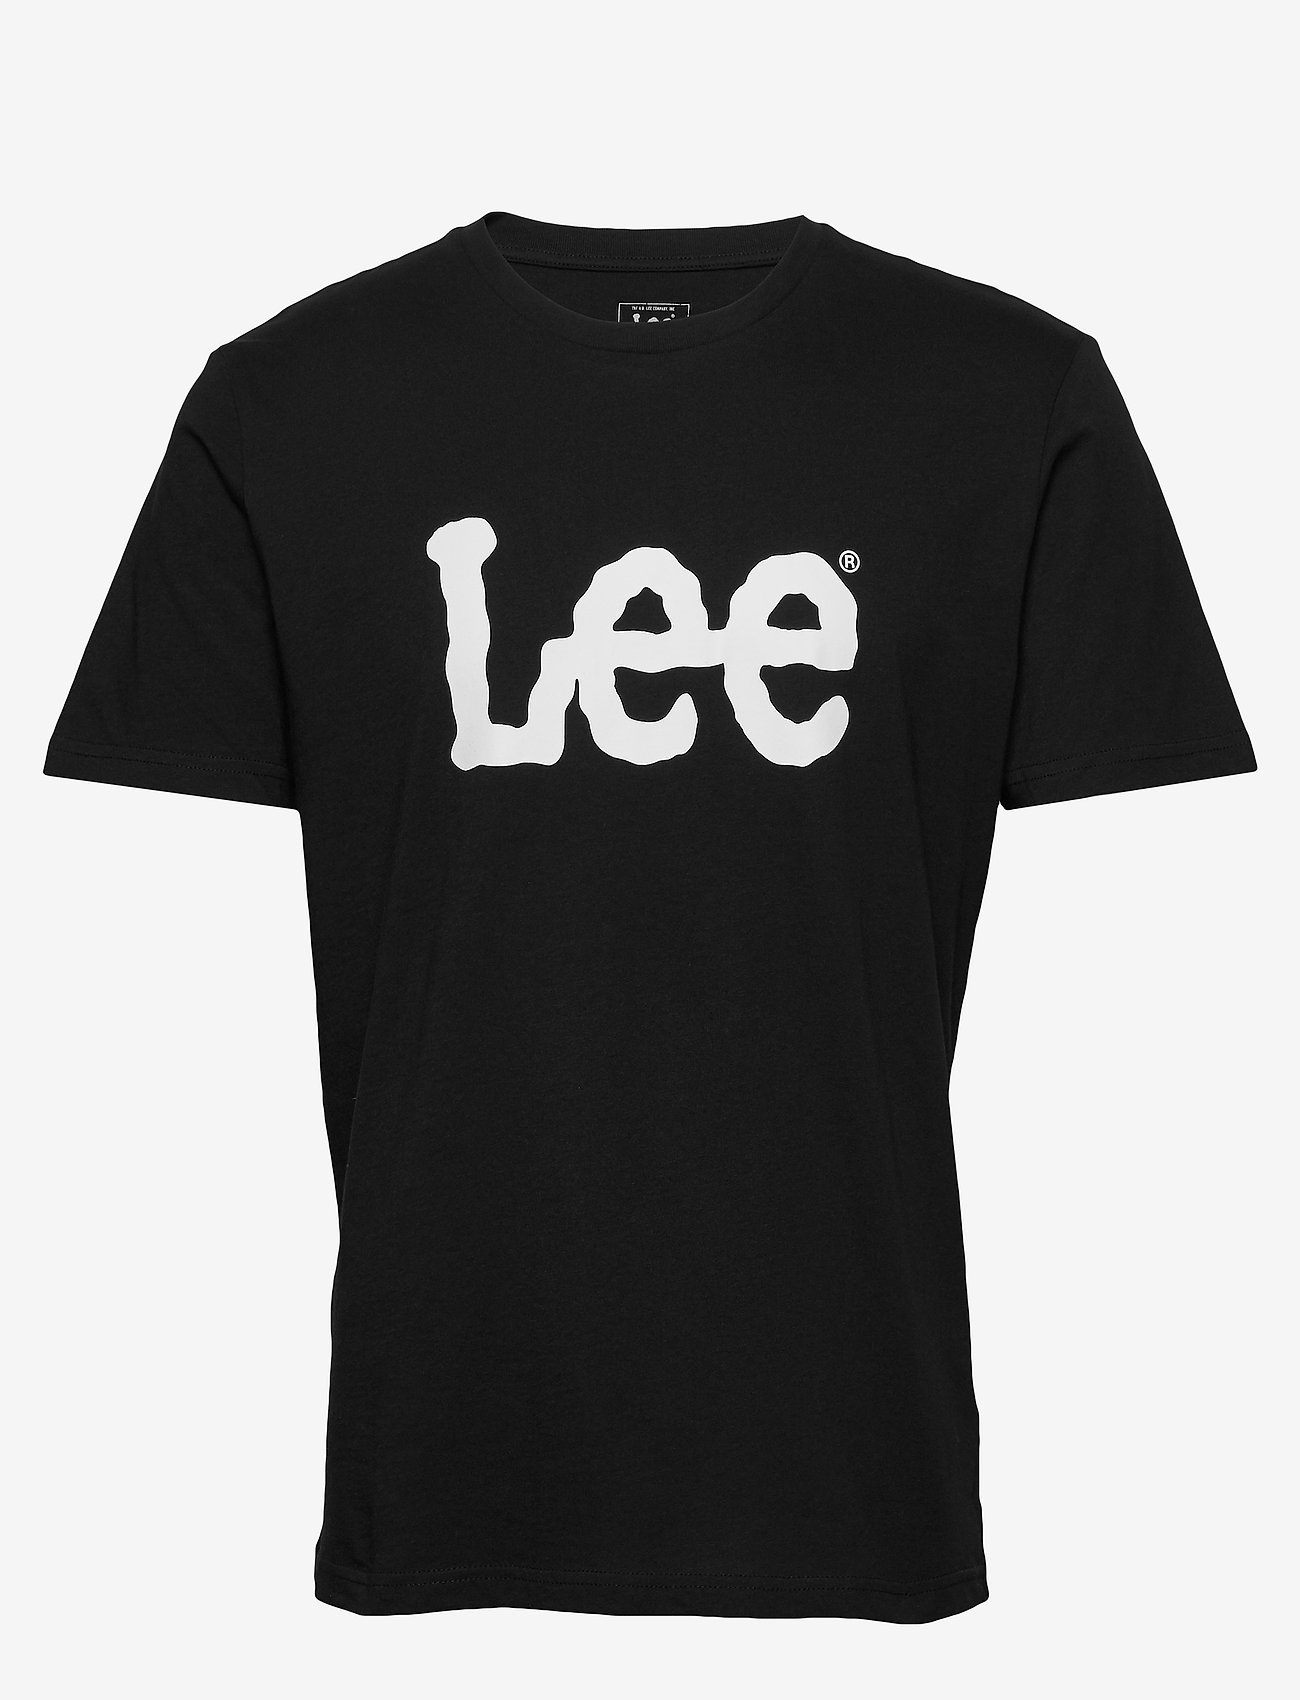 Lee Jeans - WOBBLY LOGO TEE - lägsta priserna - black - 0